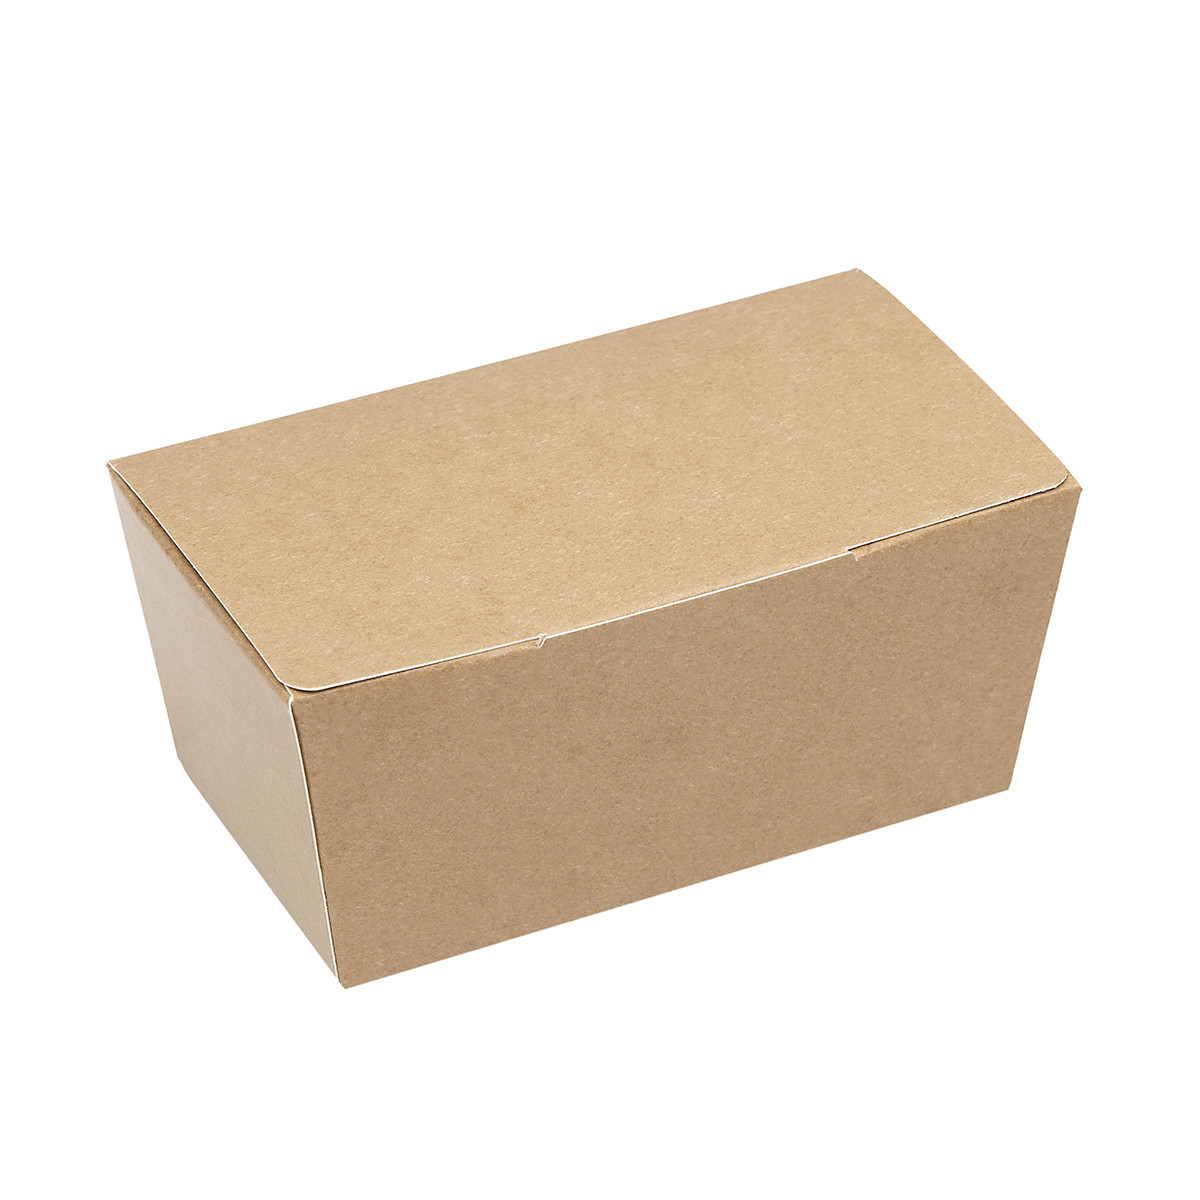 Bonbon box Kraft -250 grams- 3 pieces